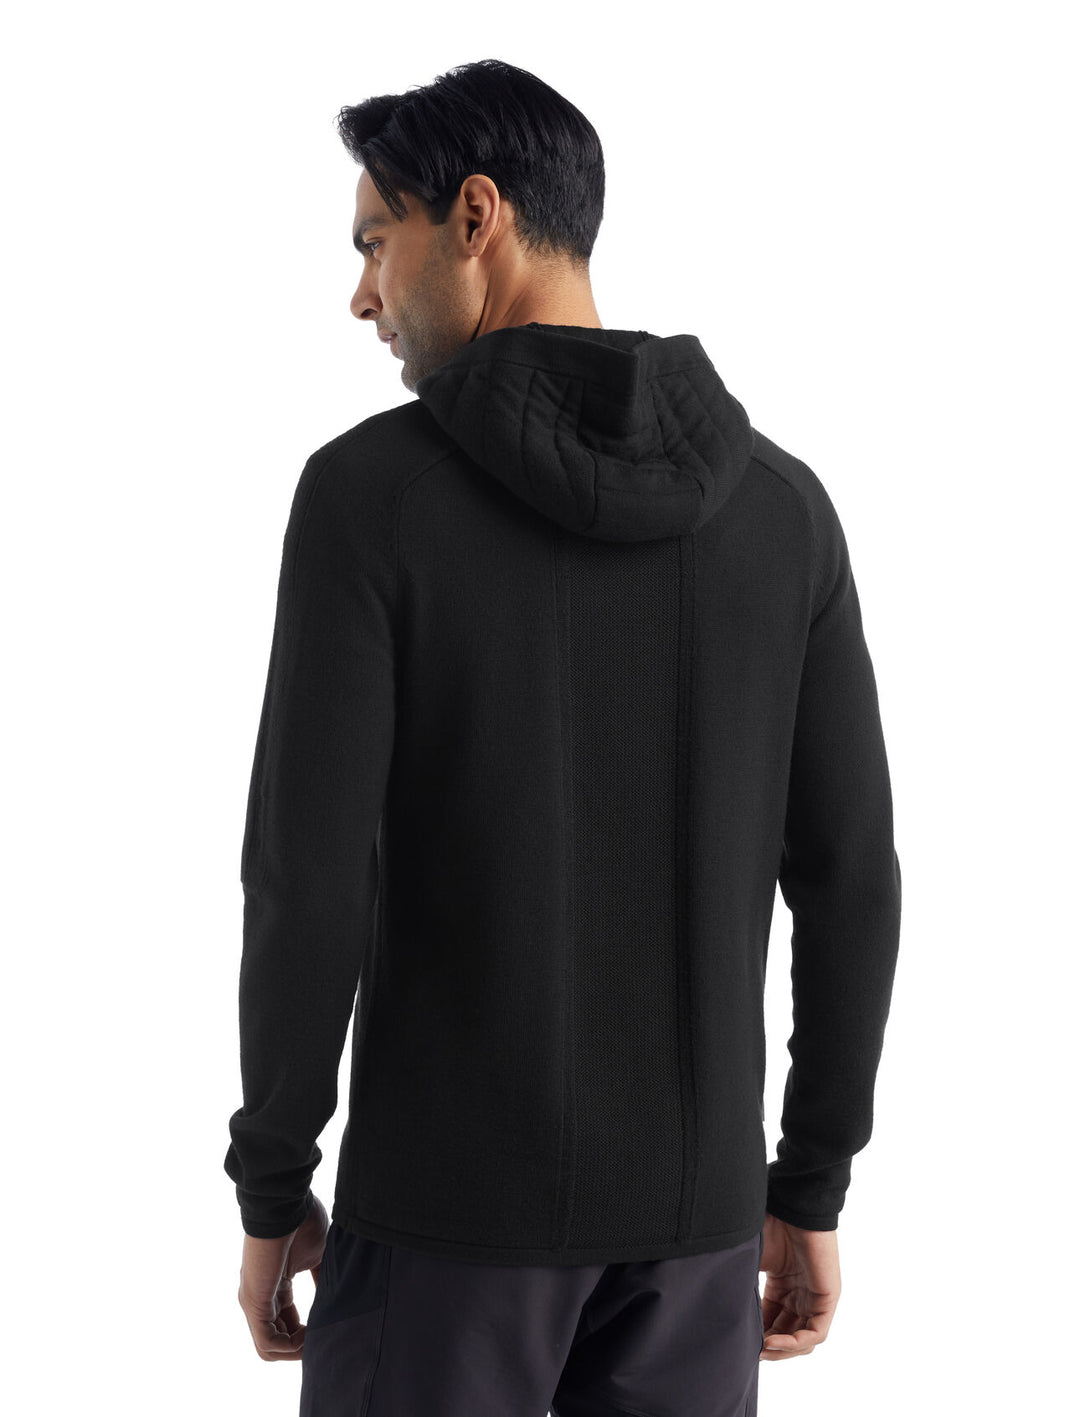 Icebreaker ZoneKnit Merino Full Zip Sweatshirt Black